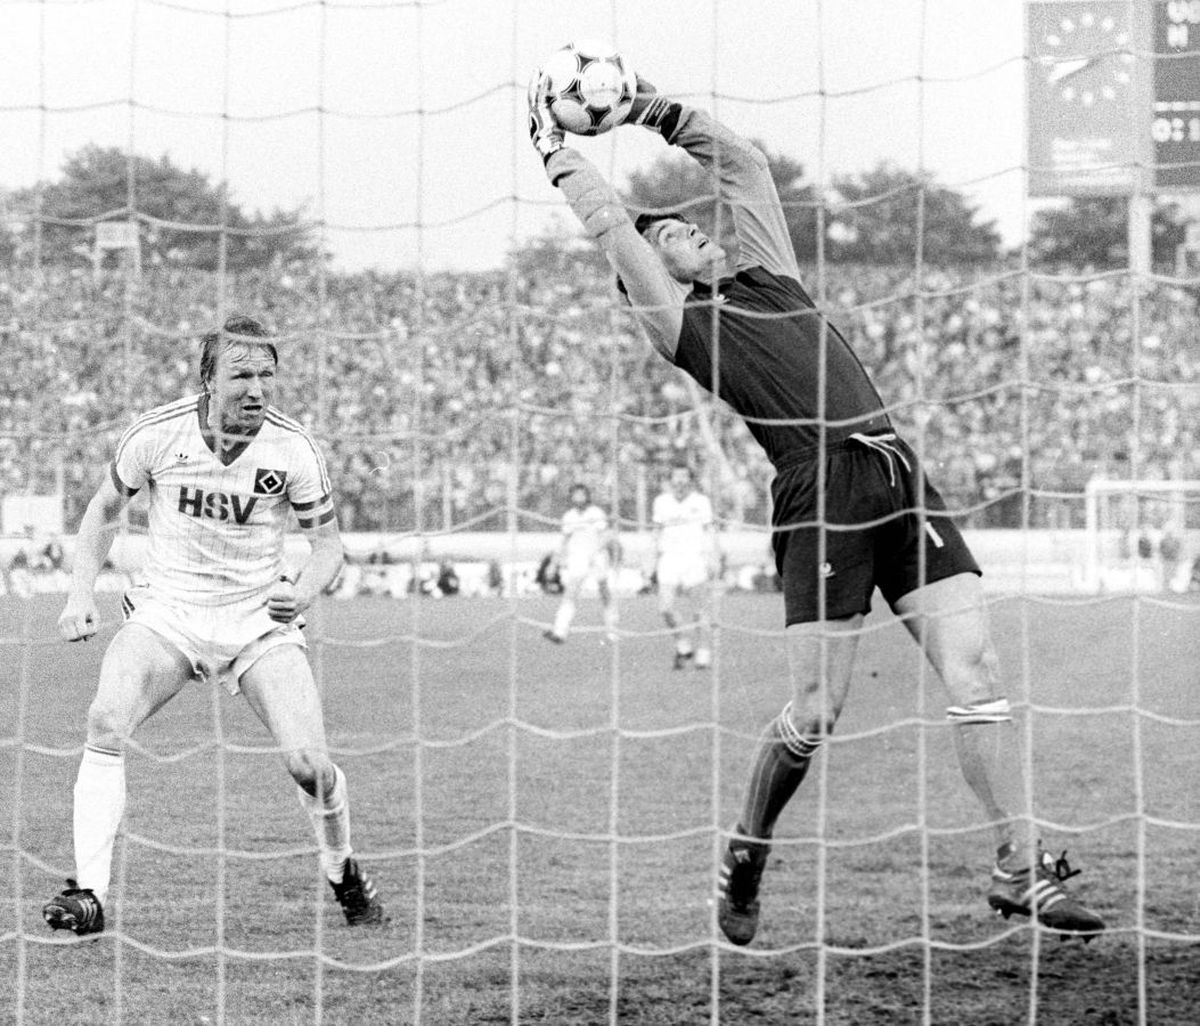 IFK Goteborg, câștigătoare Cupa UEFA 1982